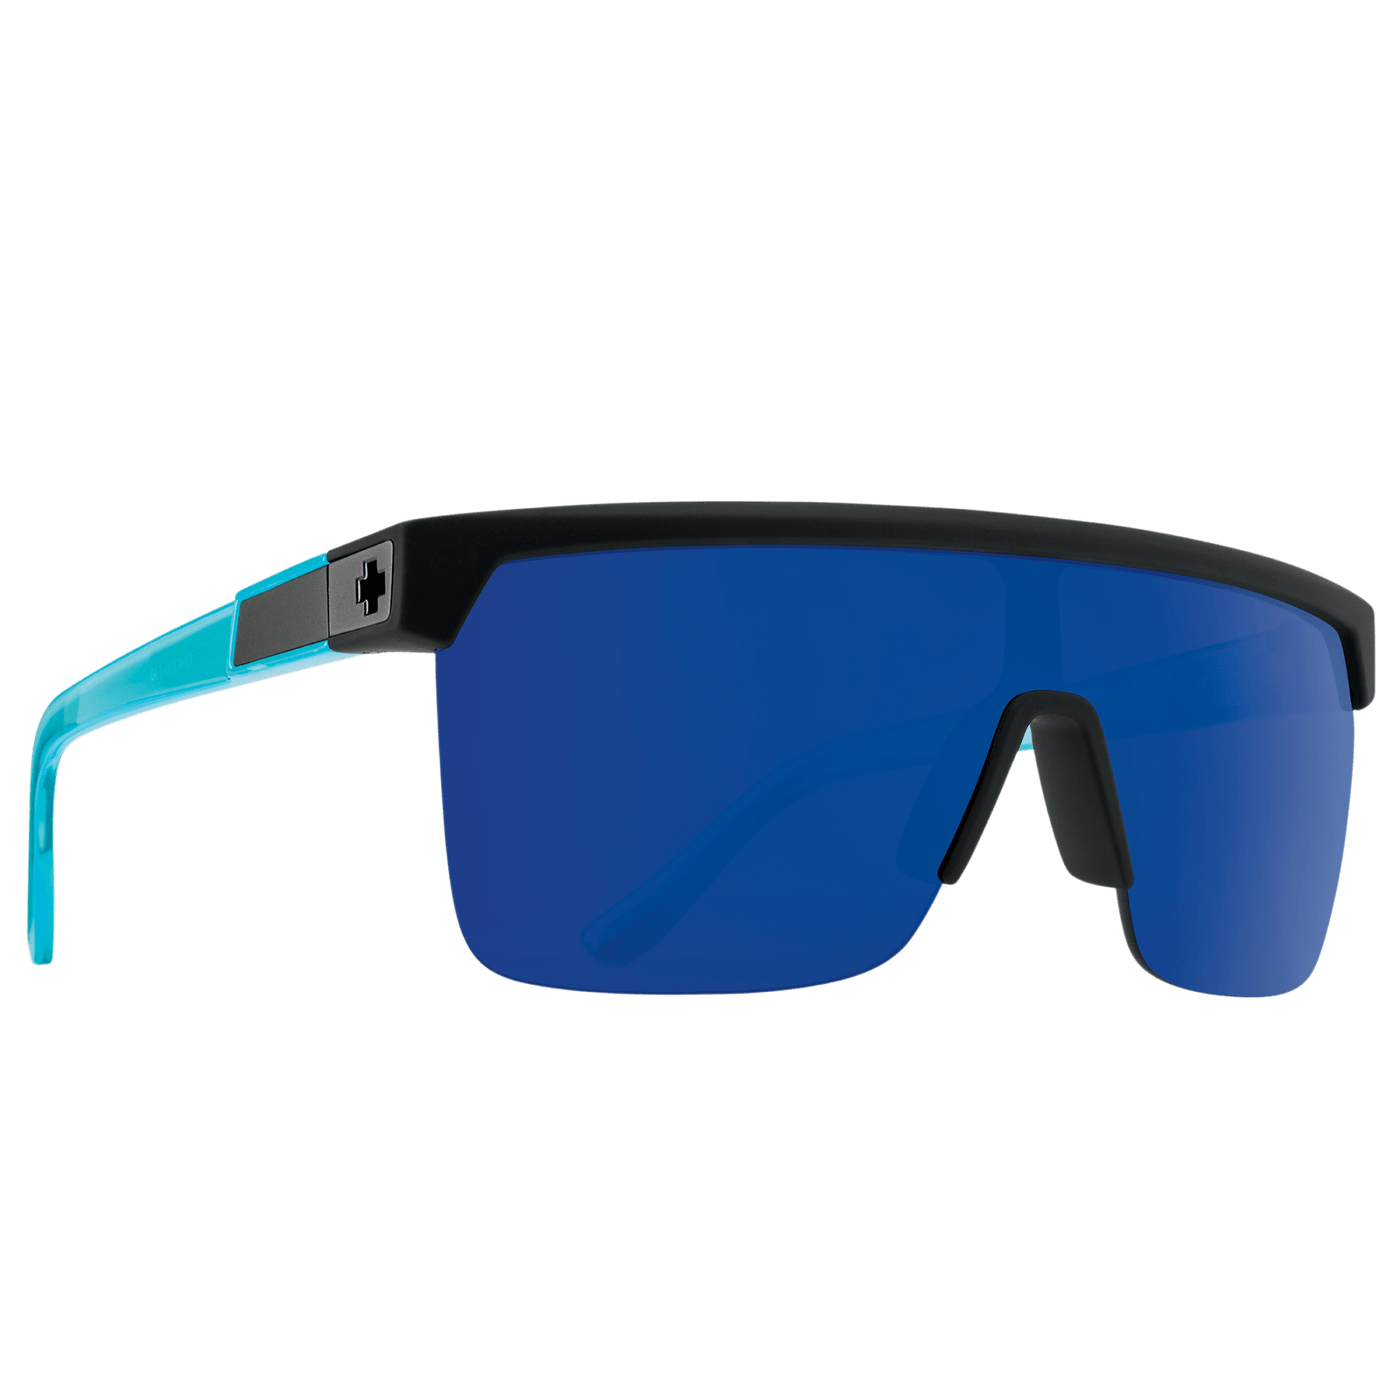 SPY FLYNN 5050 Sunglasses, Happy Lens - Dark Blue 8Lines Shop - Fast Shipping